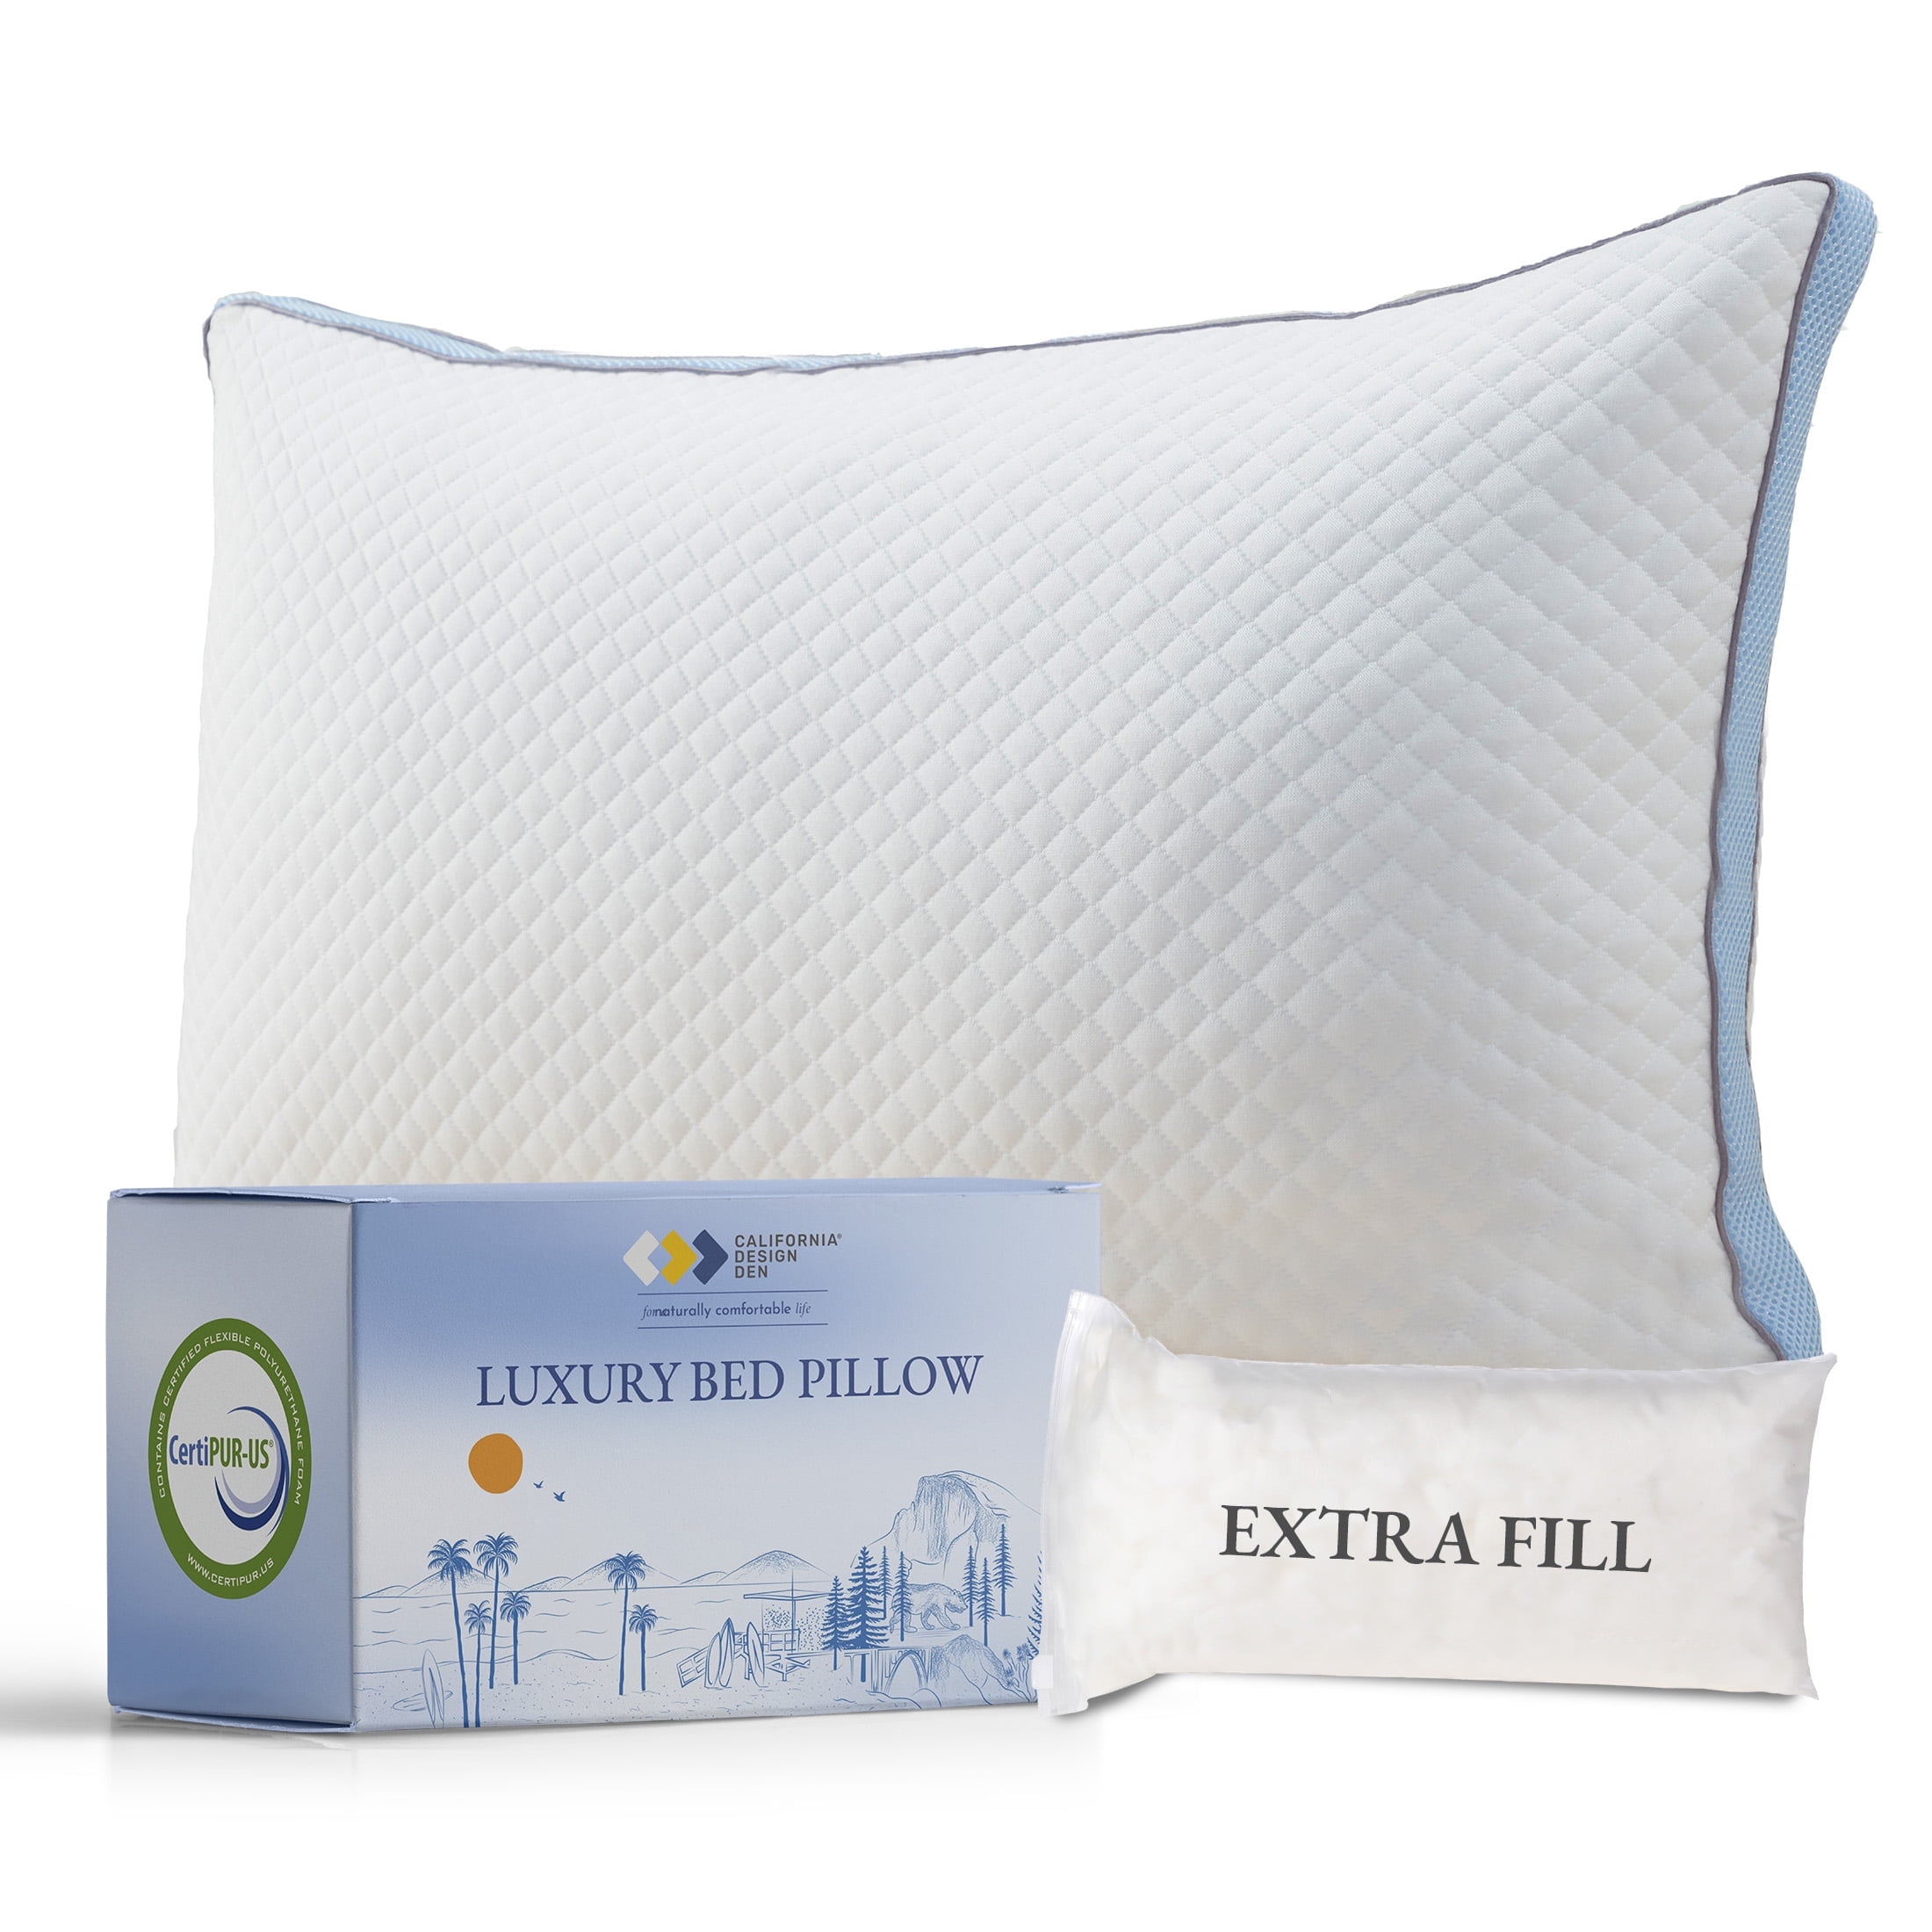 Allswell AquaCool Memory Foam Pillow, Standard Queen (16” x 25” x 5.5”) 